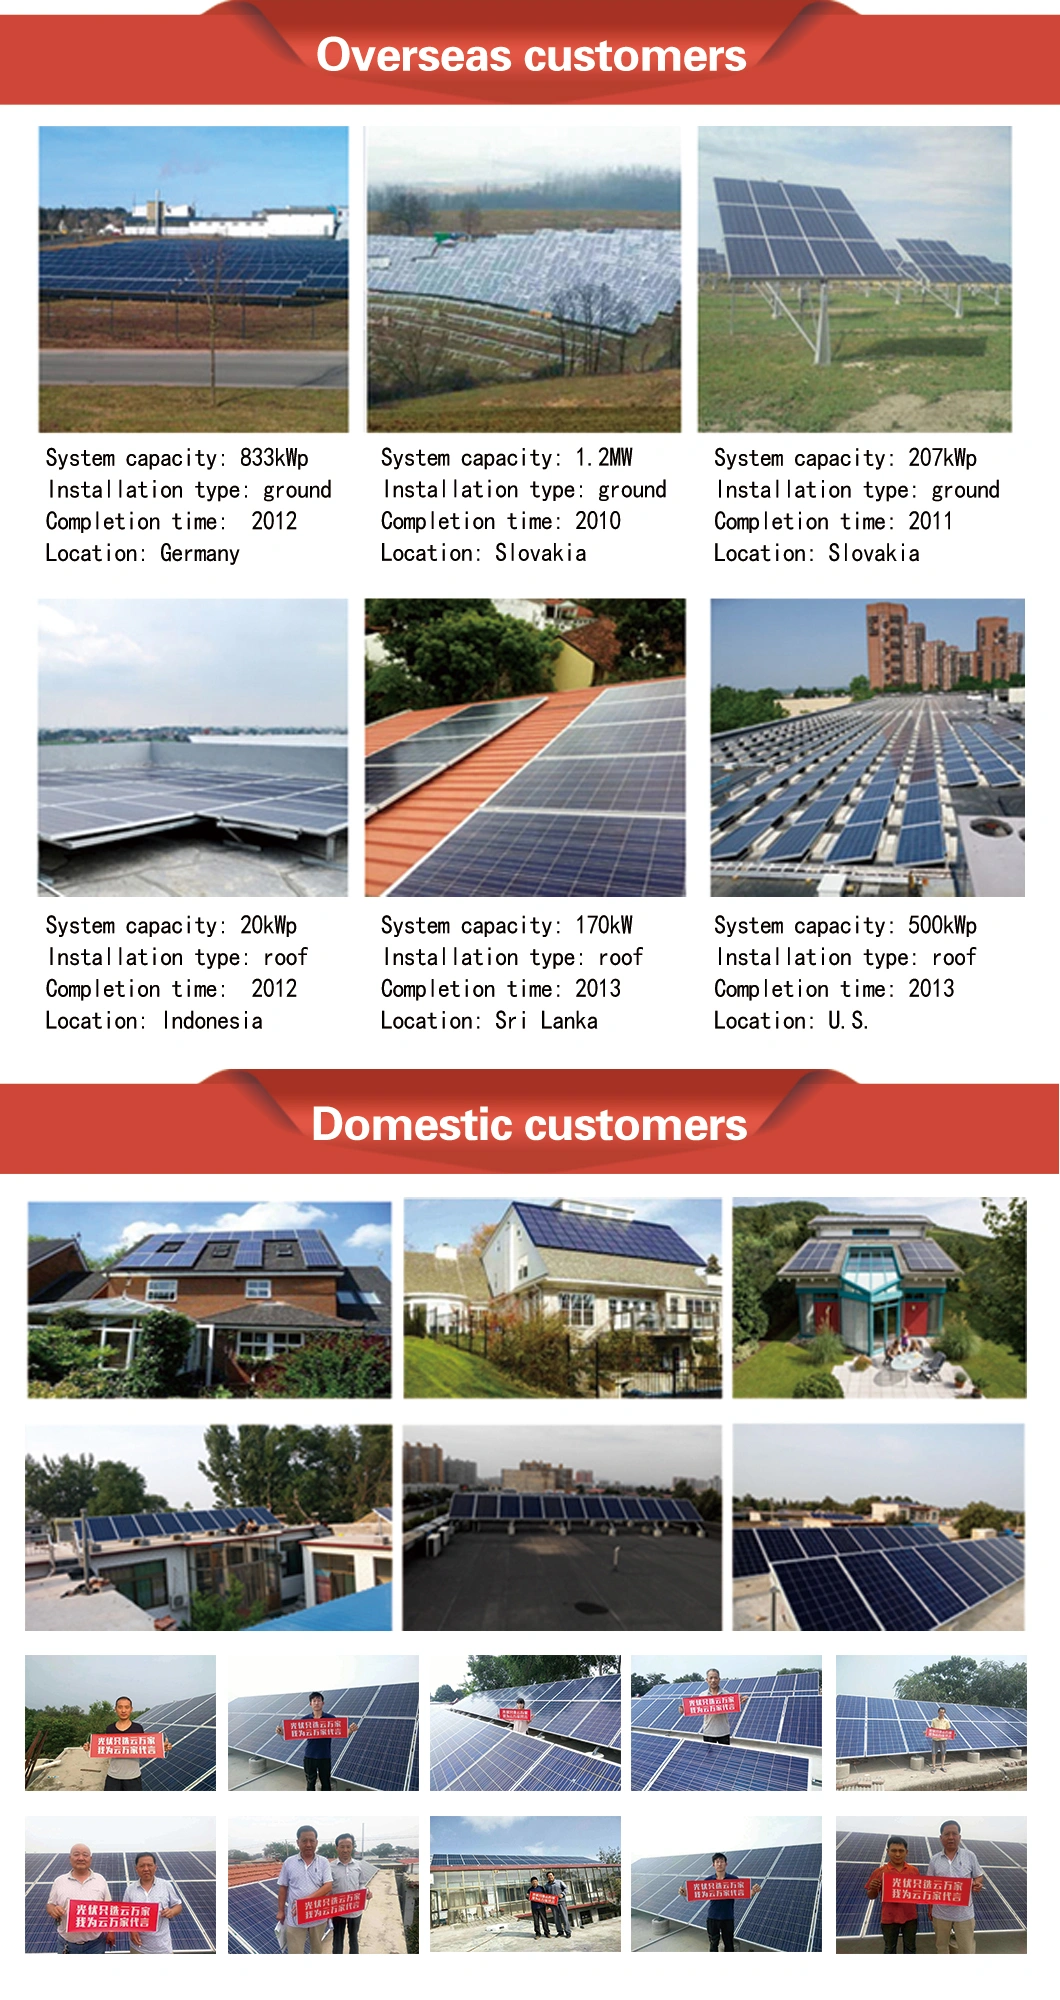 15kw on-Grid Home Solar Power System 9 Solar Power Solar Household Solar Power System Solar Energy PV System